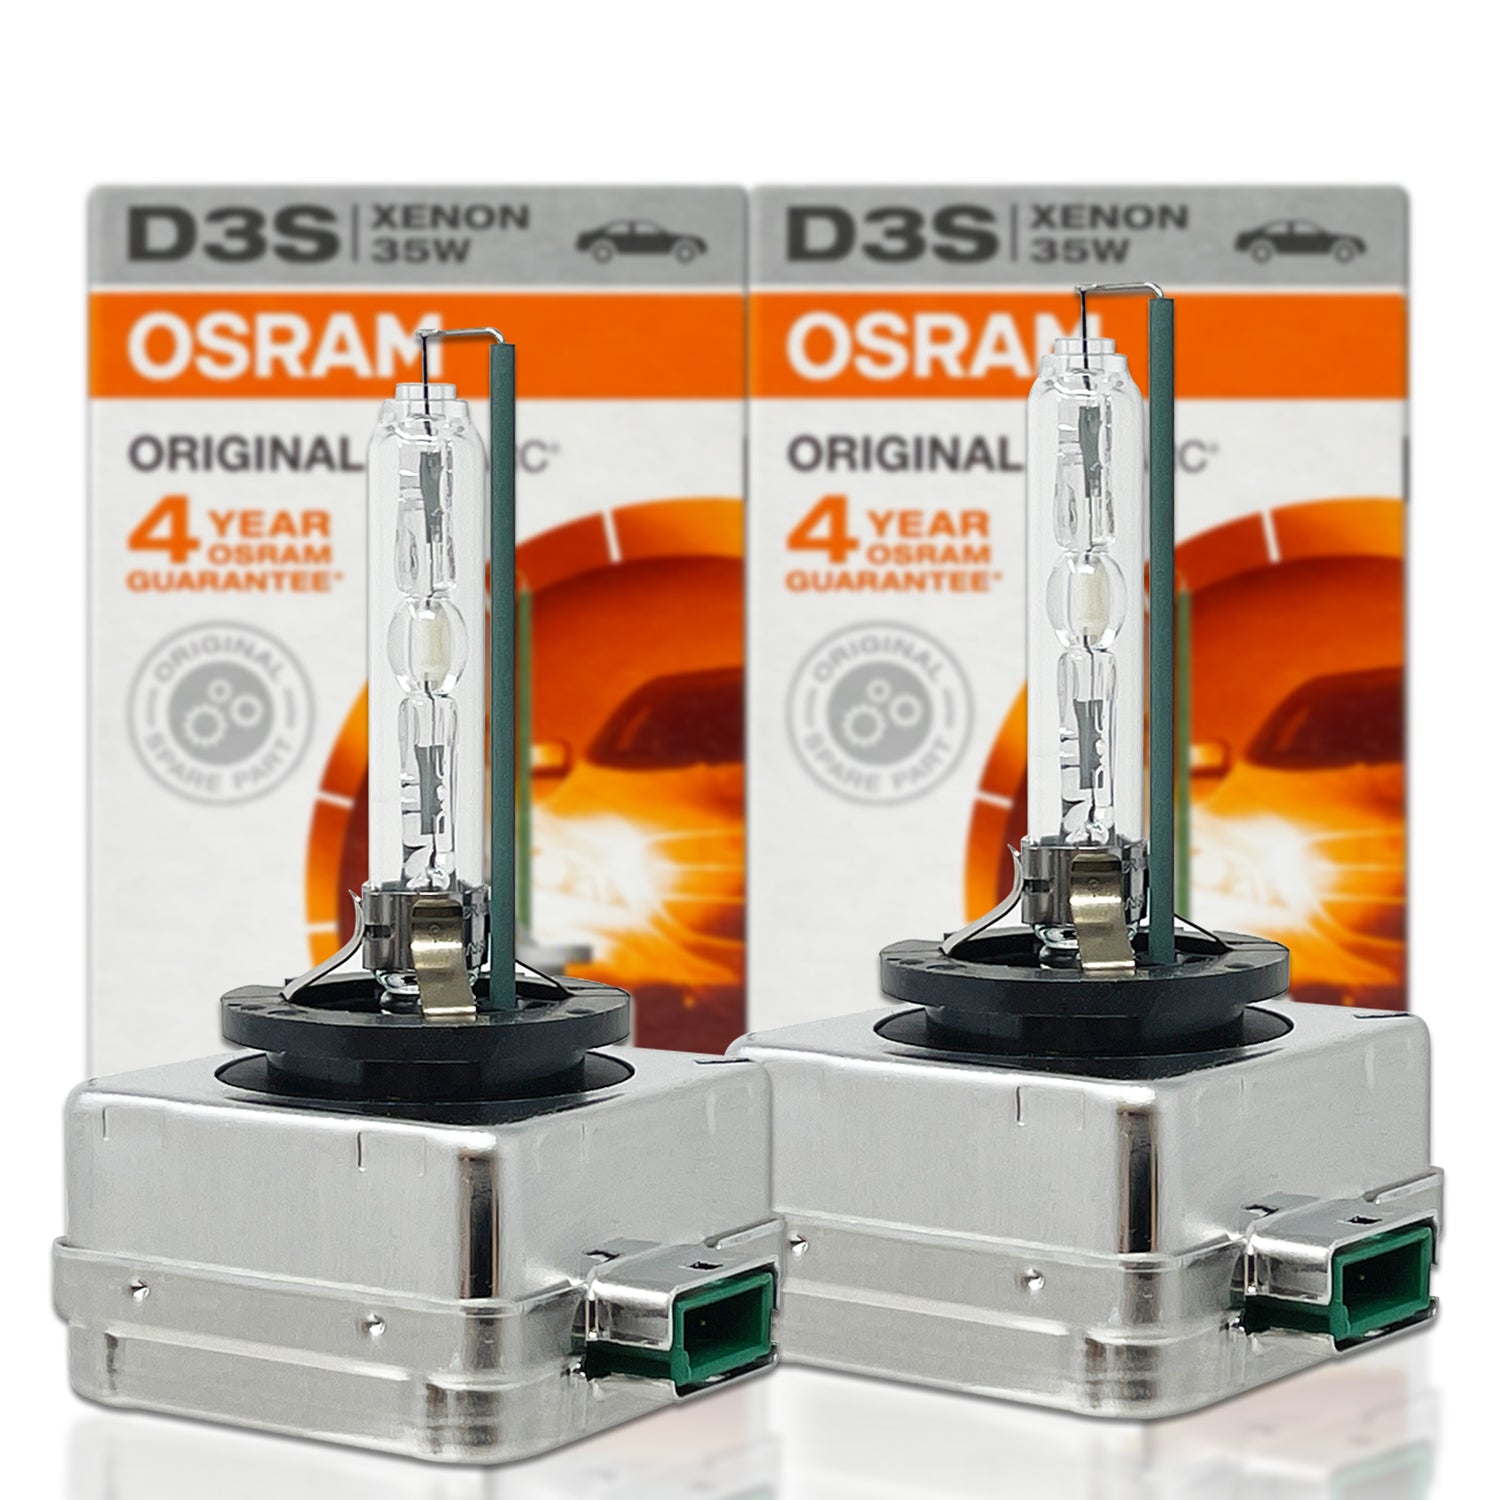 D3S High Output: Osram Xenarc 66340 Night Breaker Laser